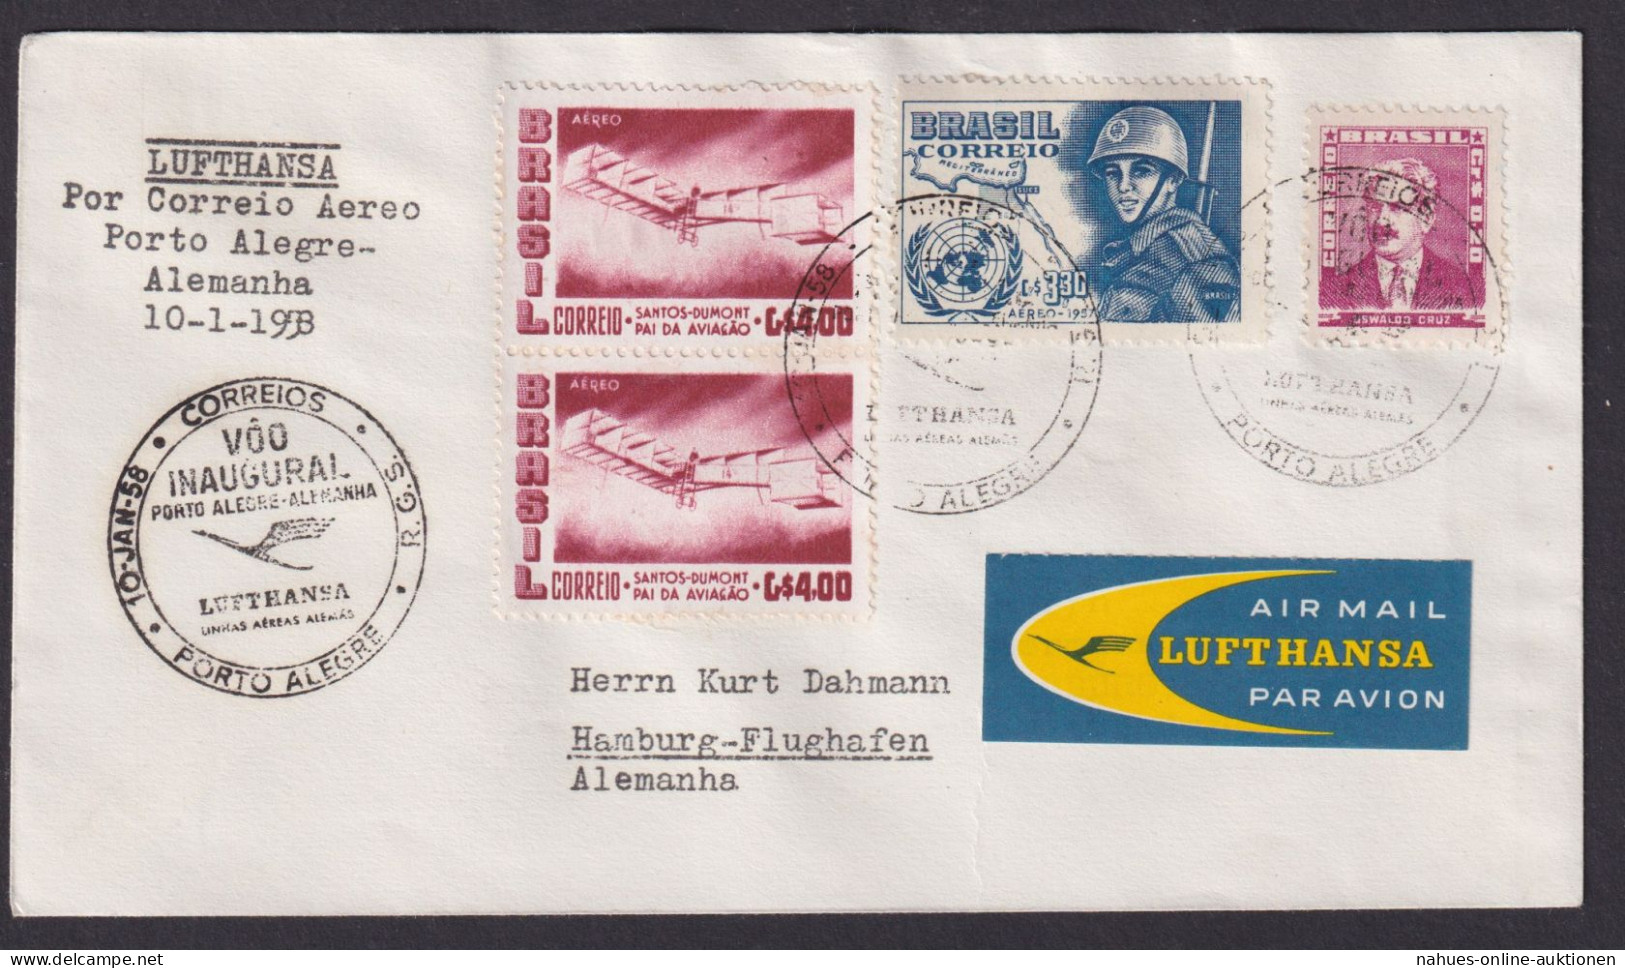 Flugpost Brief Air Mail Lufthansa Porto Alegre Brasilien Hamburg Flughafen - Covers & Documents